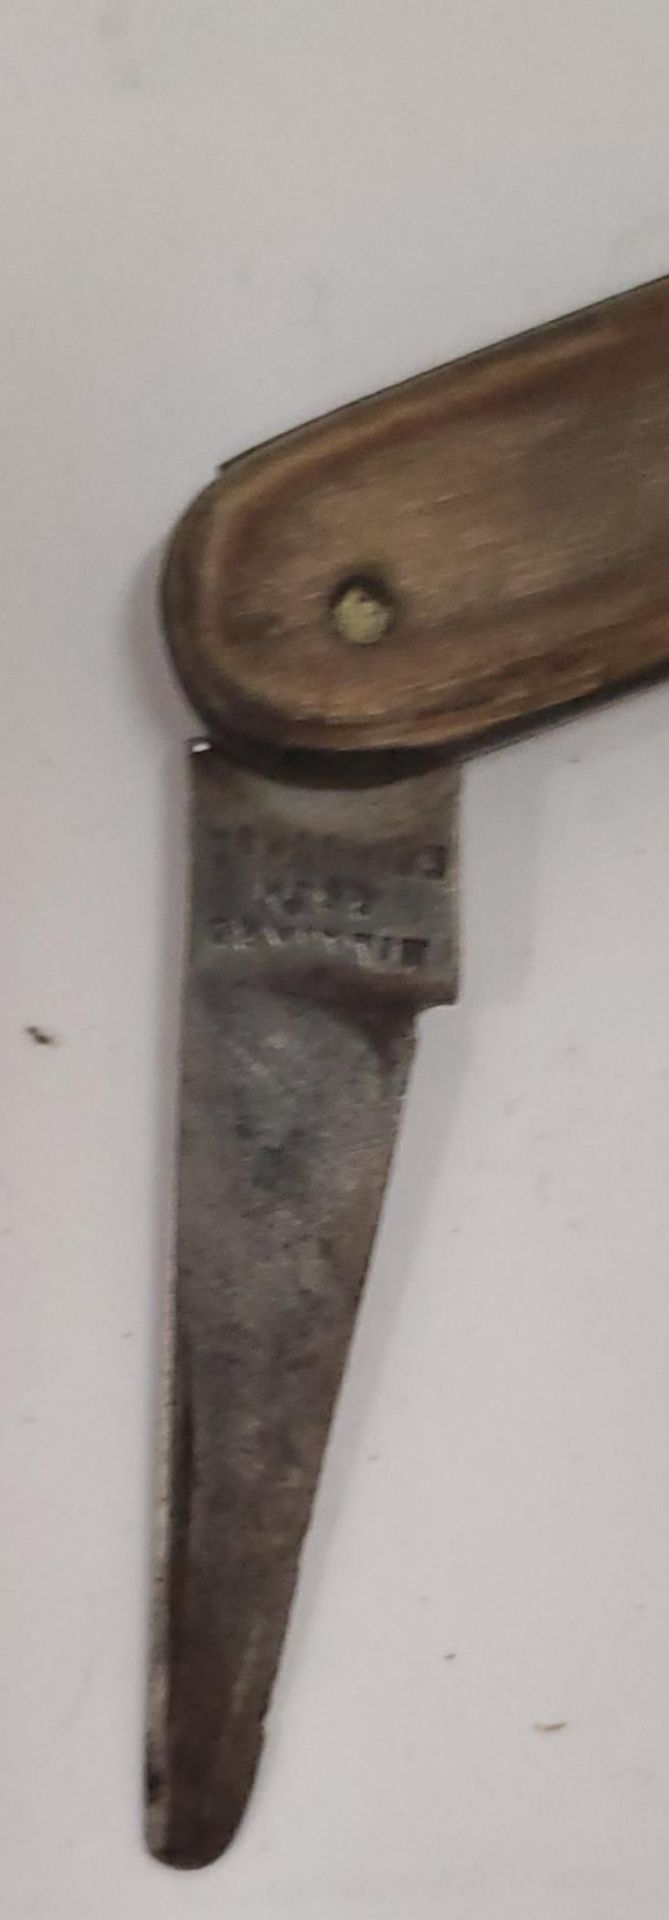 A MILLIARD, EDINBURGH BONE HANDLED FRUIT KNIFE - Image 2 of 3